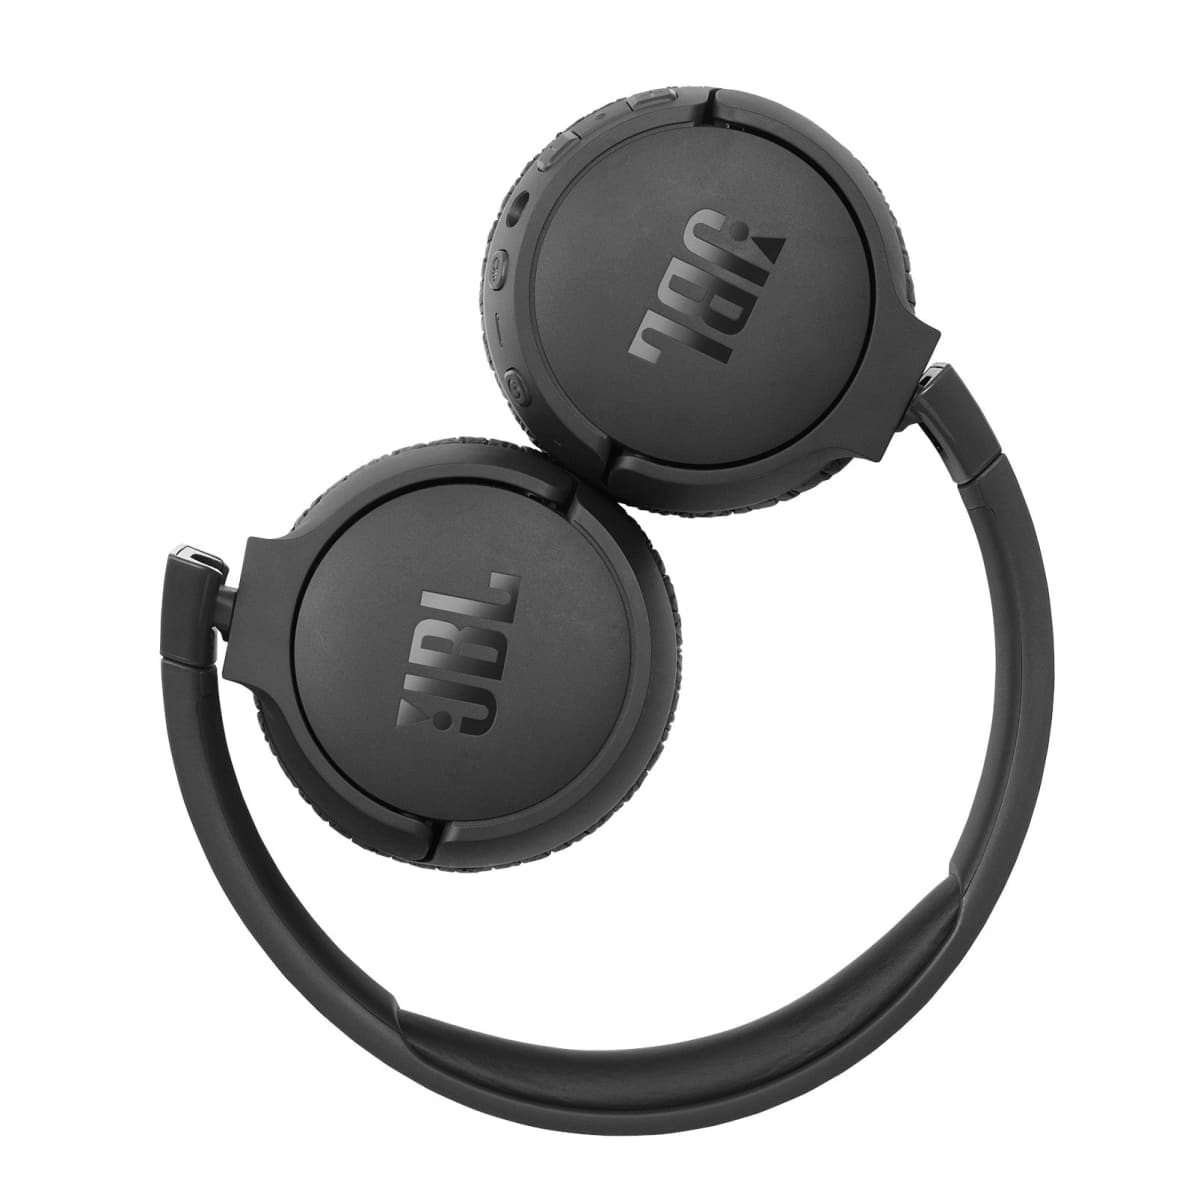 JBL LIVE 660NC Wireless Over-Ear NC Headphones - Headphone